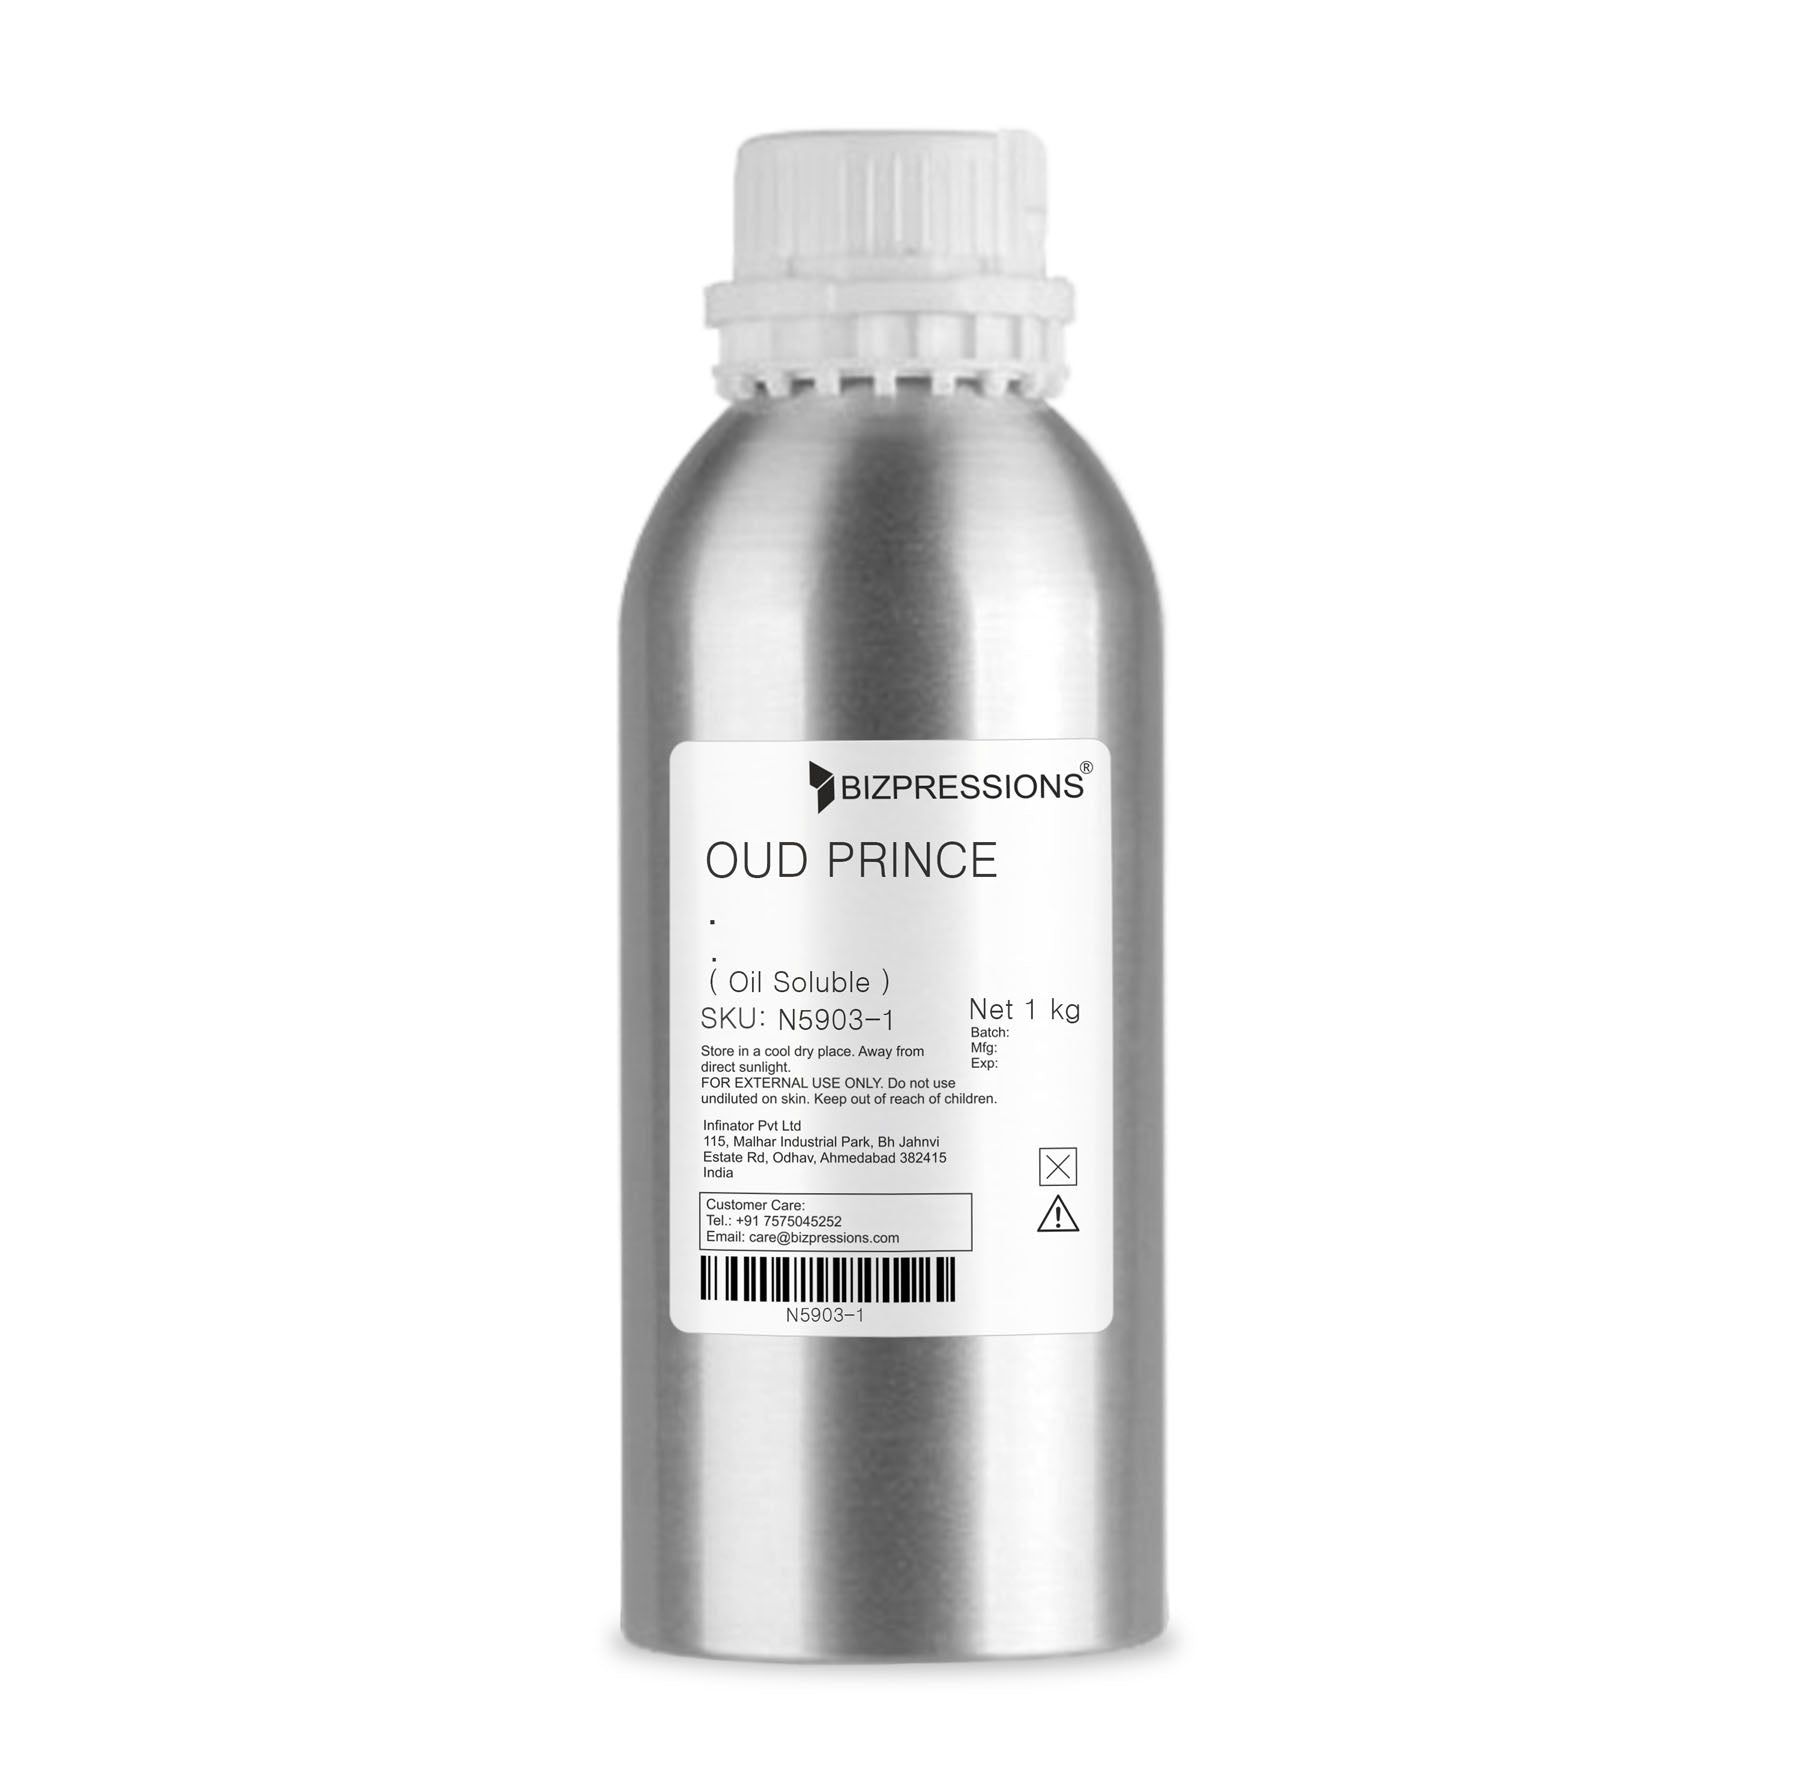 OUD PRINCE - Fragrance ( Oil Soluble ) - 1 kg